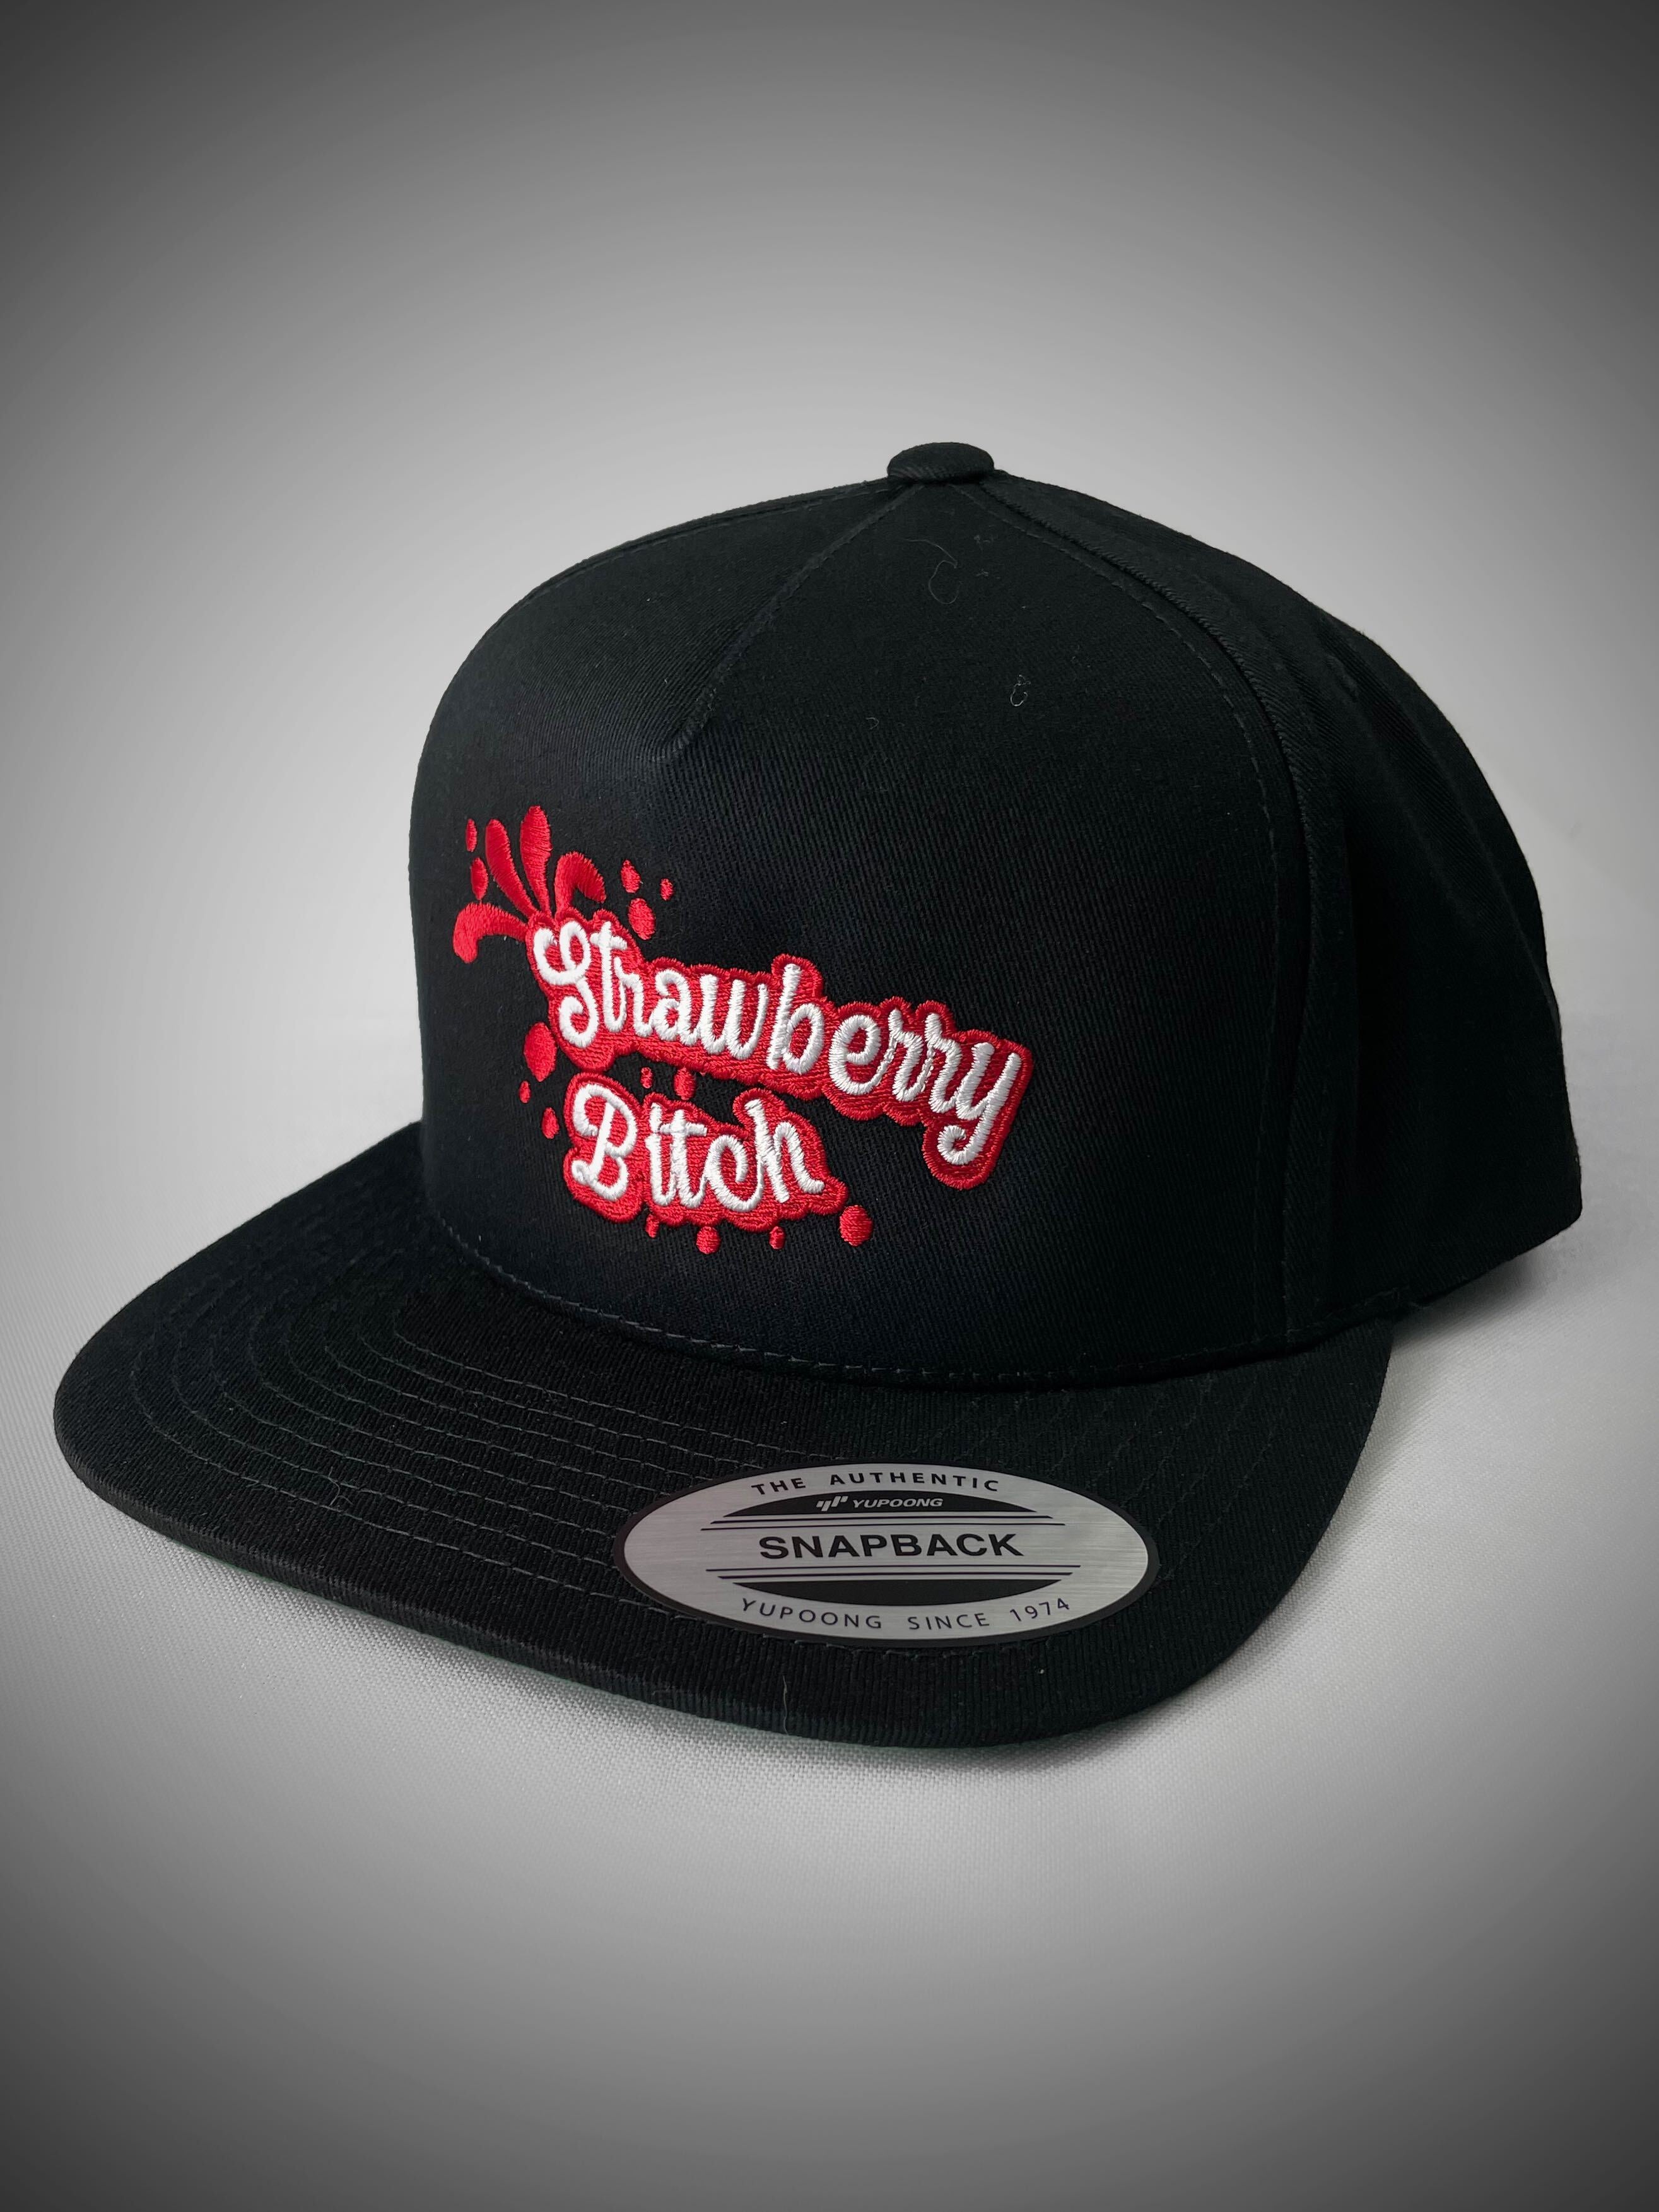 Strawberry Bitch Snapback Hat (Solid Black)